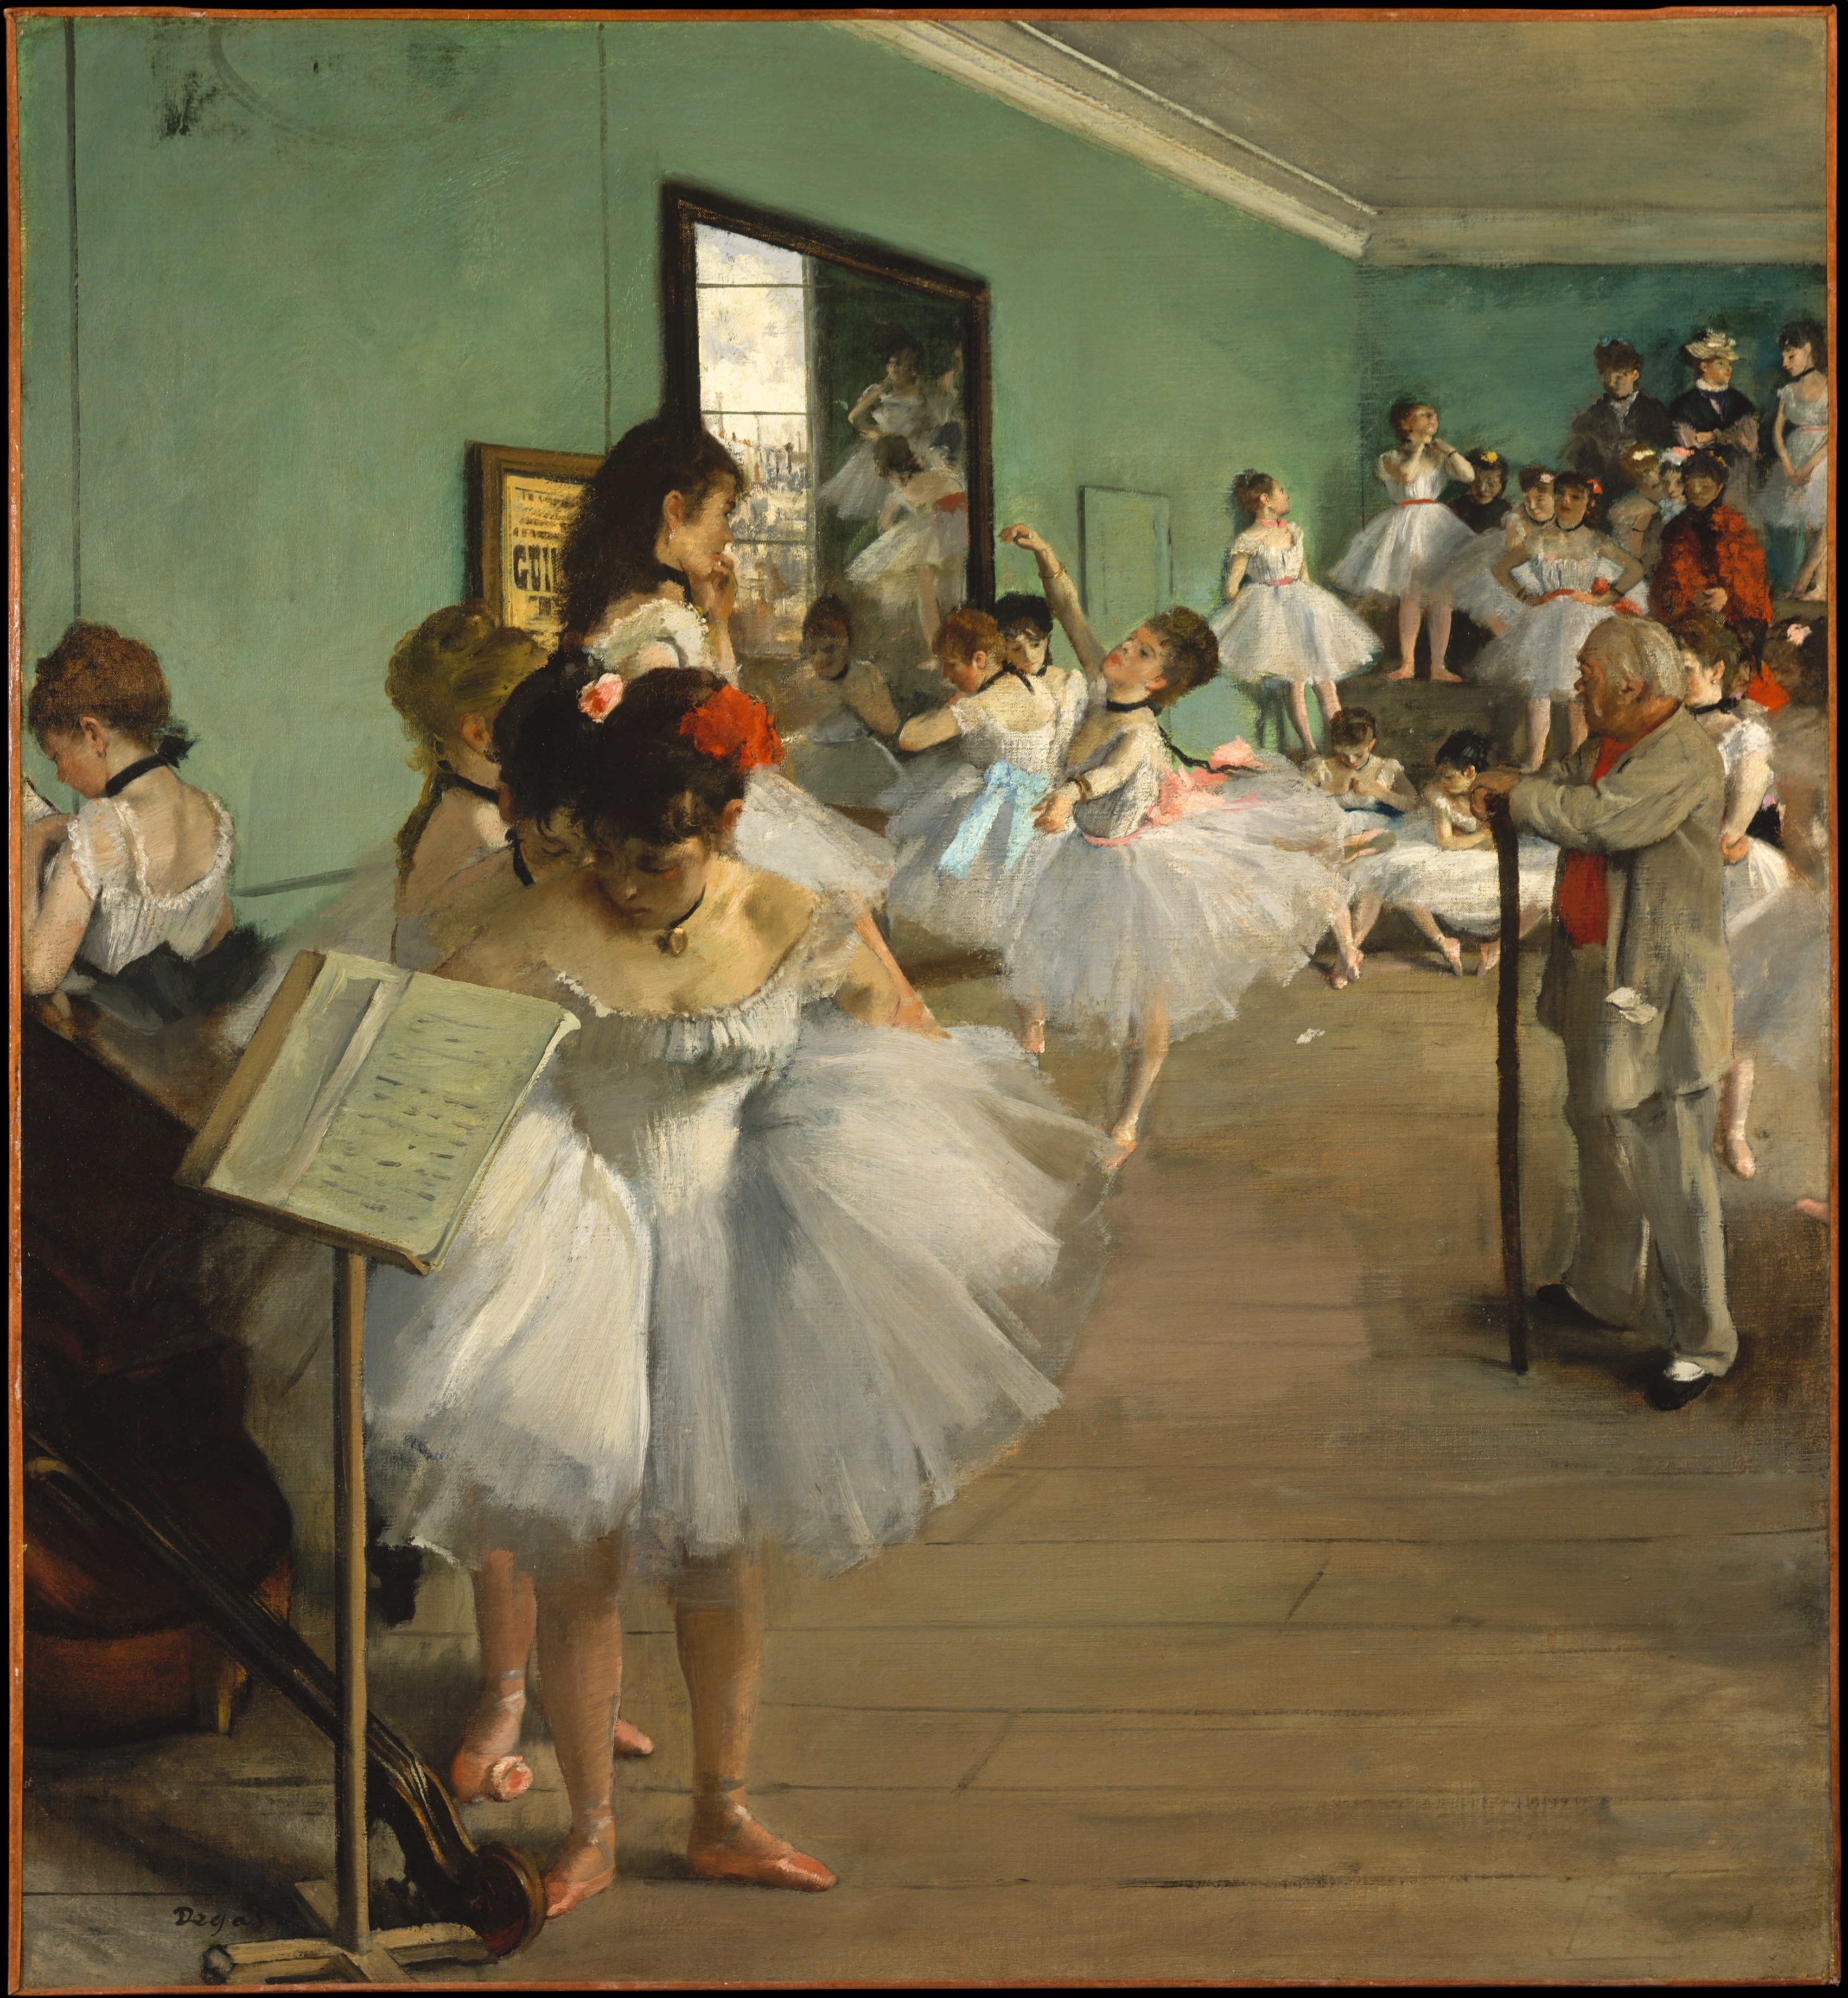 Lekcja tańca by Edgar Degas - 1874 - 83.5 x 77.2 cm 